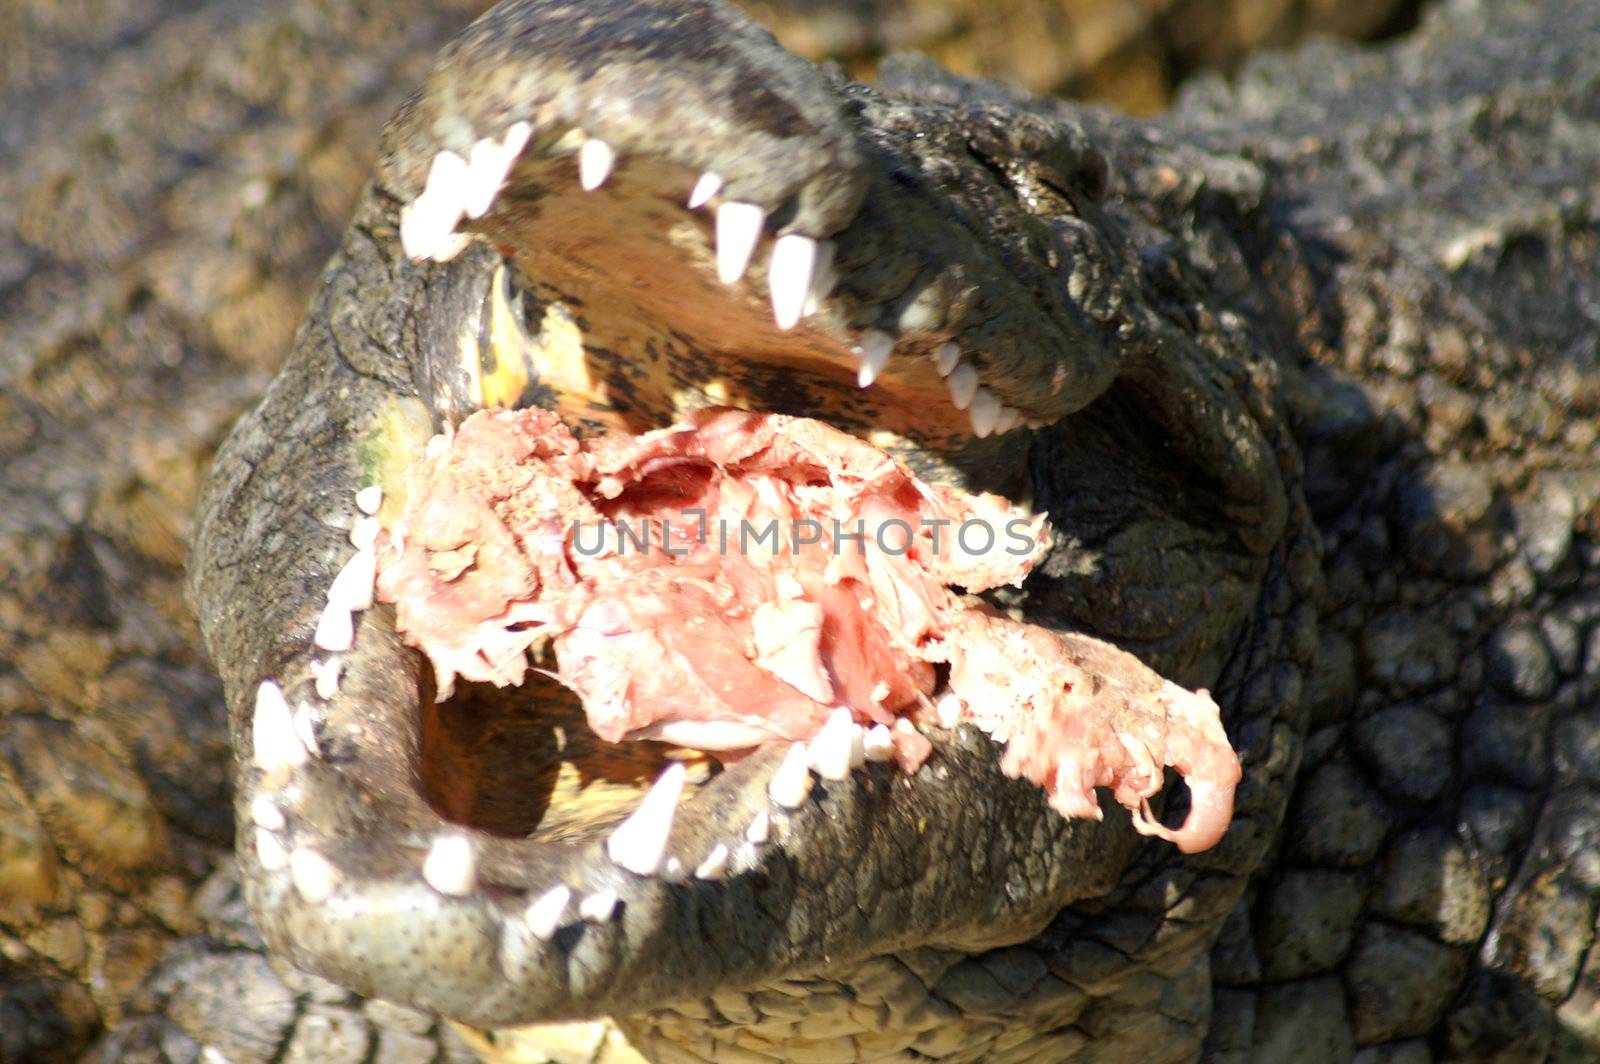 alligator eating by photochecker